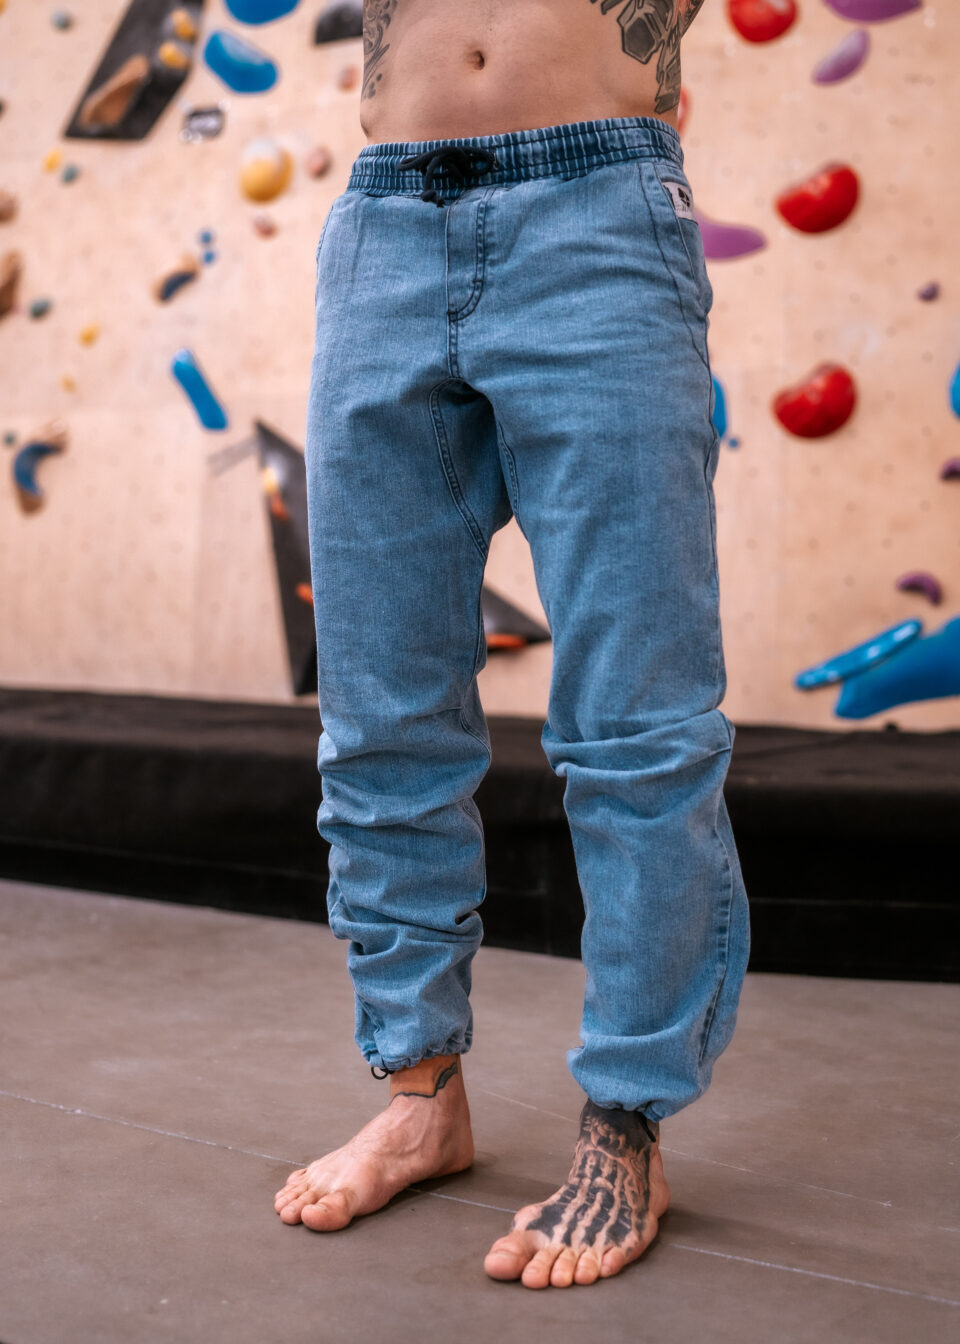 "X" Pockets pants - light blue jeans